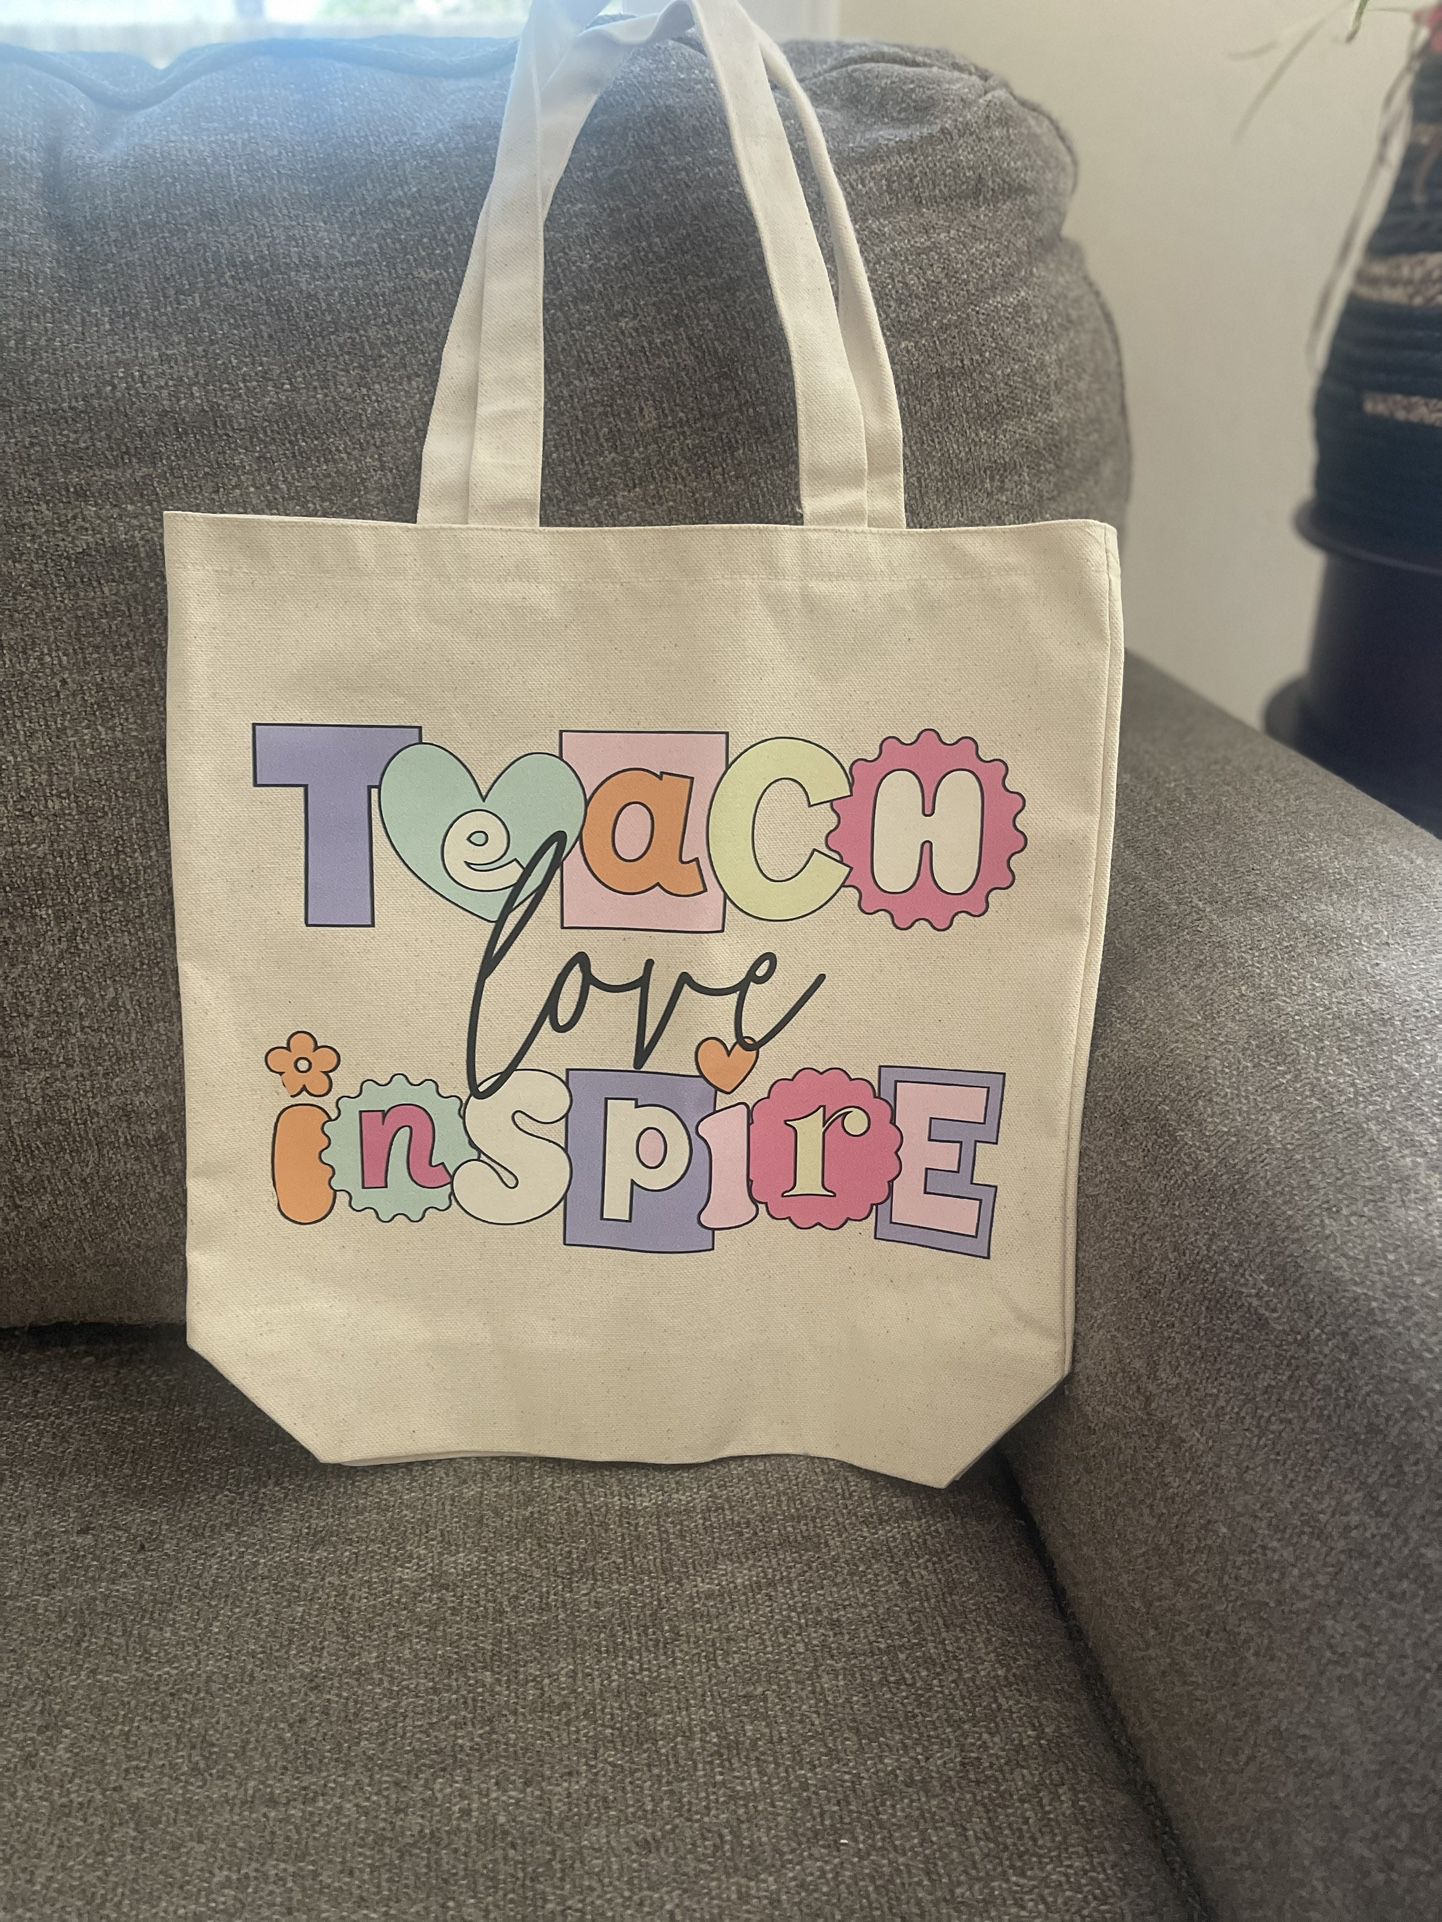 Teacher Tote Bag